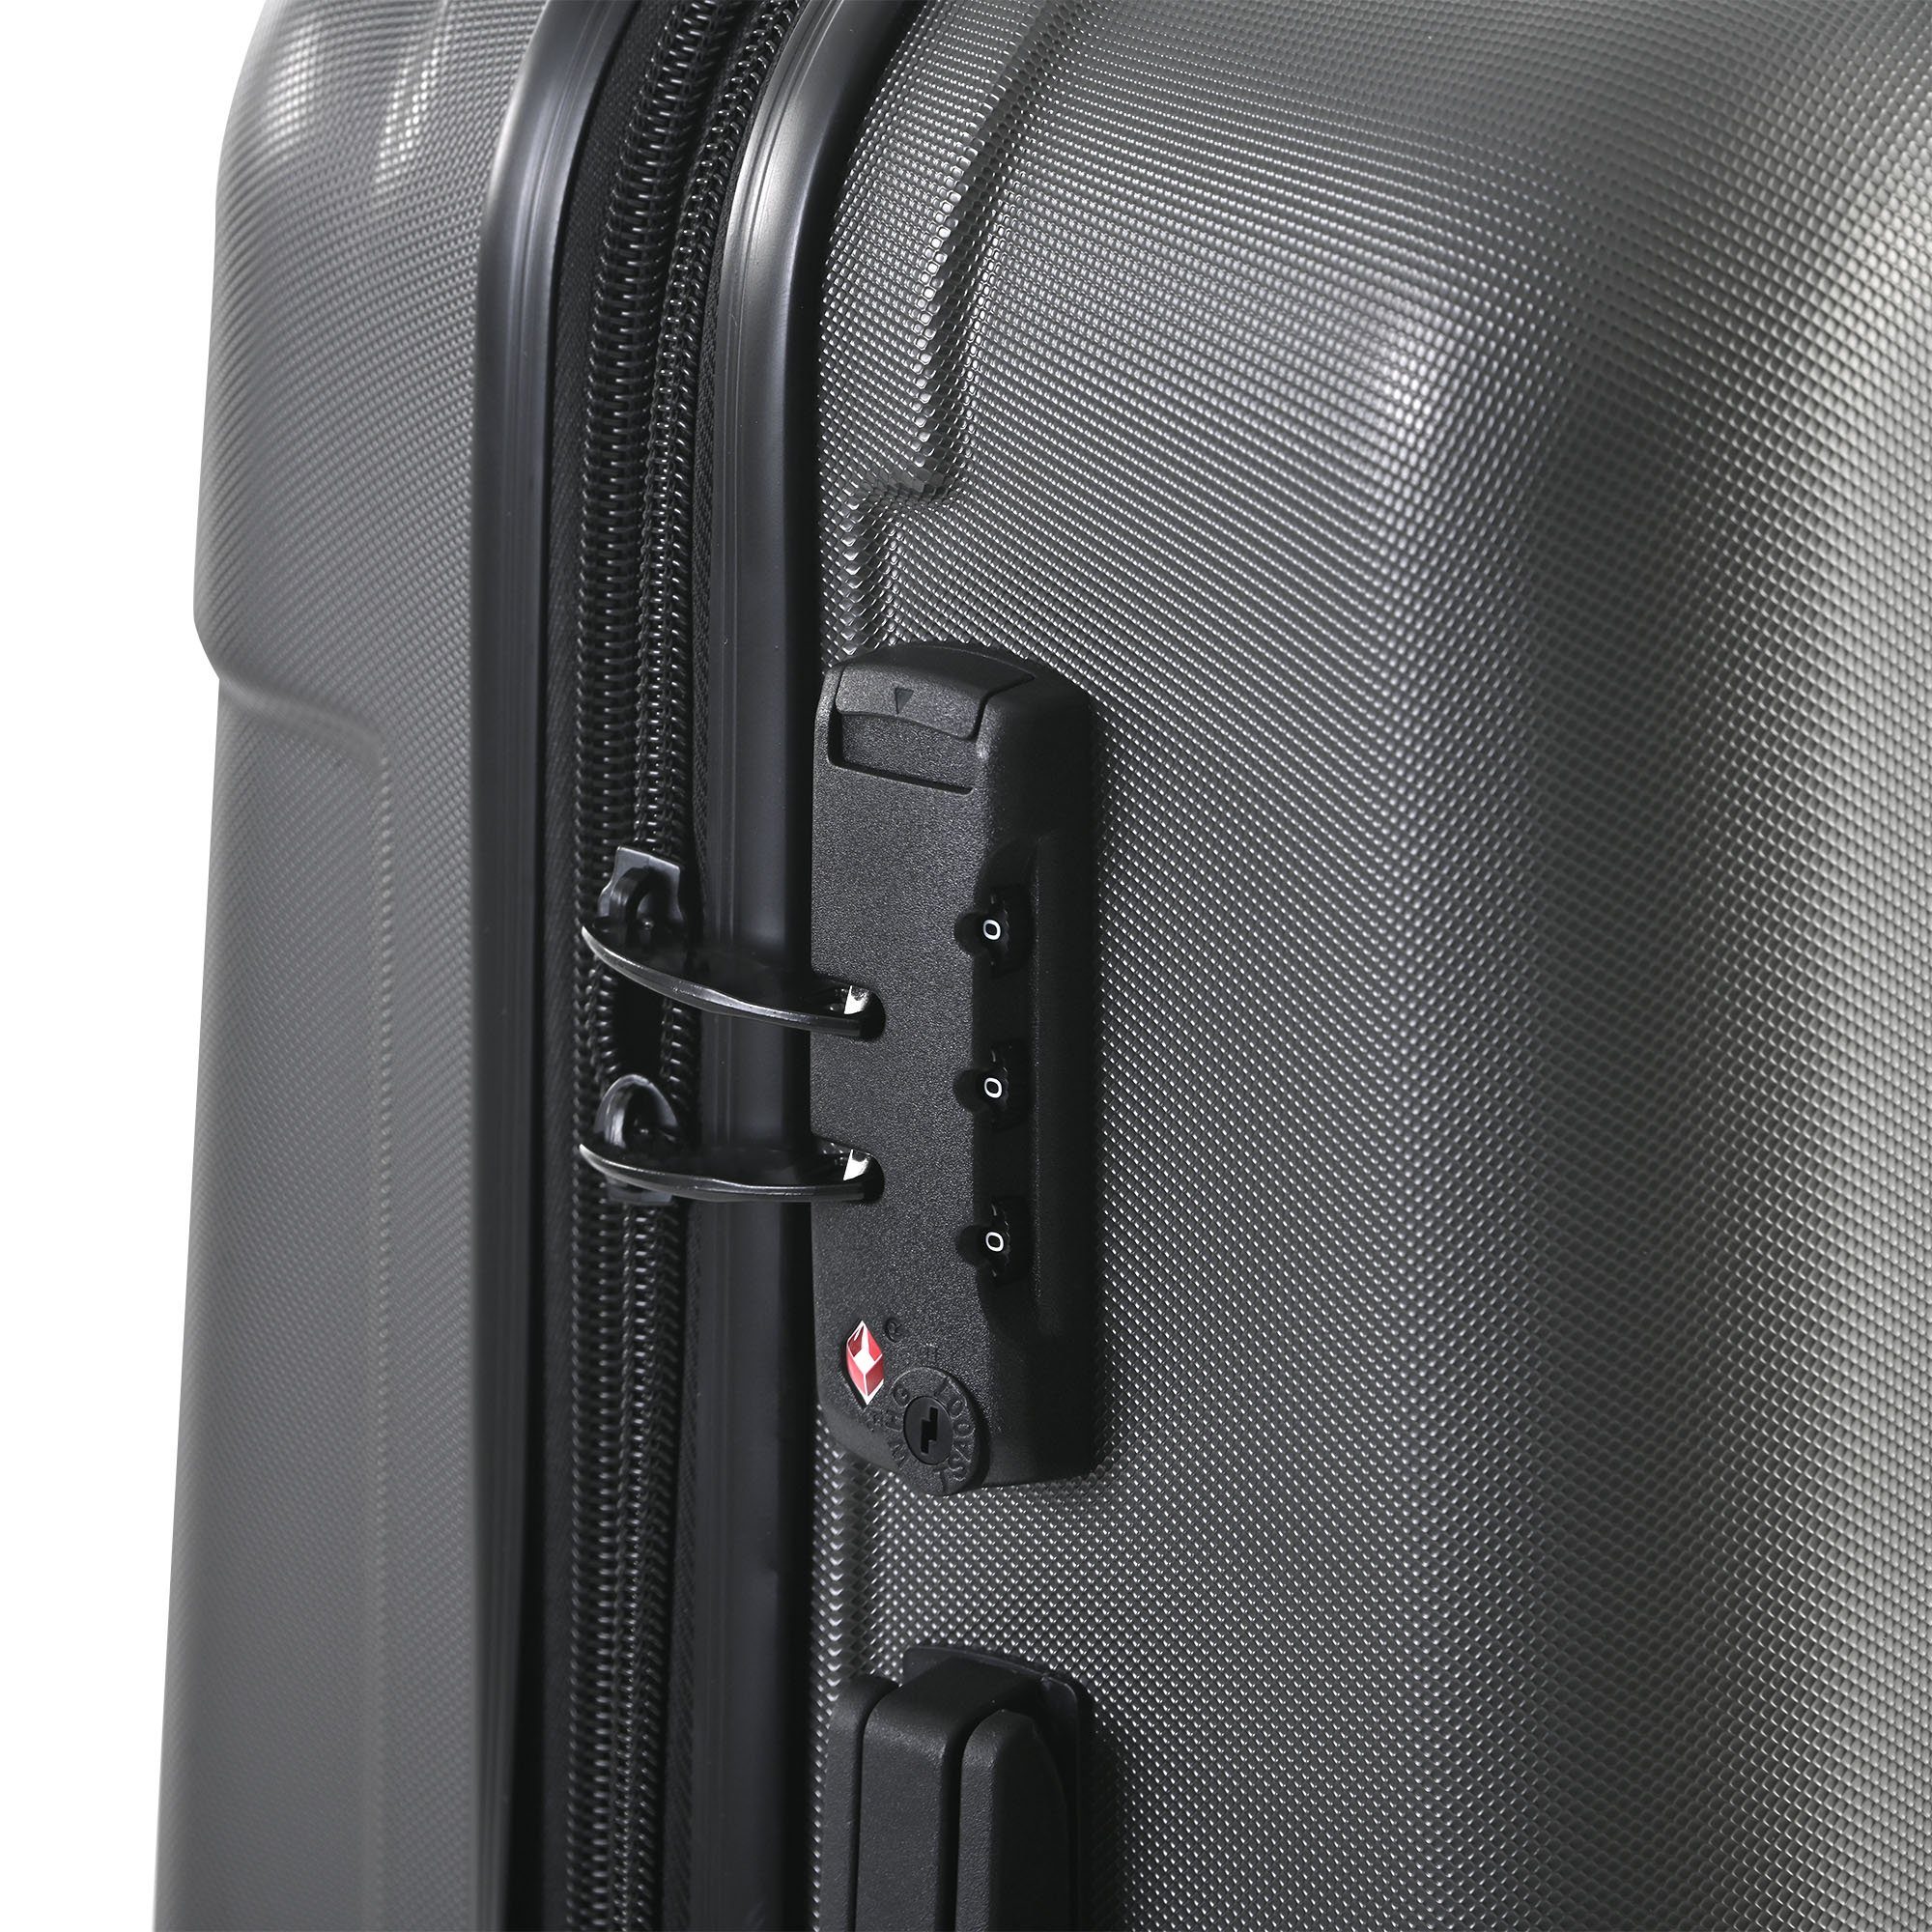 Kofferset und mit M, Universalrad ABS-Material, EXTSUD Grau Doppelrad maximiertem Handgepäckkoffer 360-Grad-Drehrollen Stauraum, TSA-Schloss Hartschalen-Handgepäck